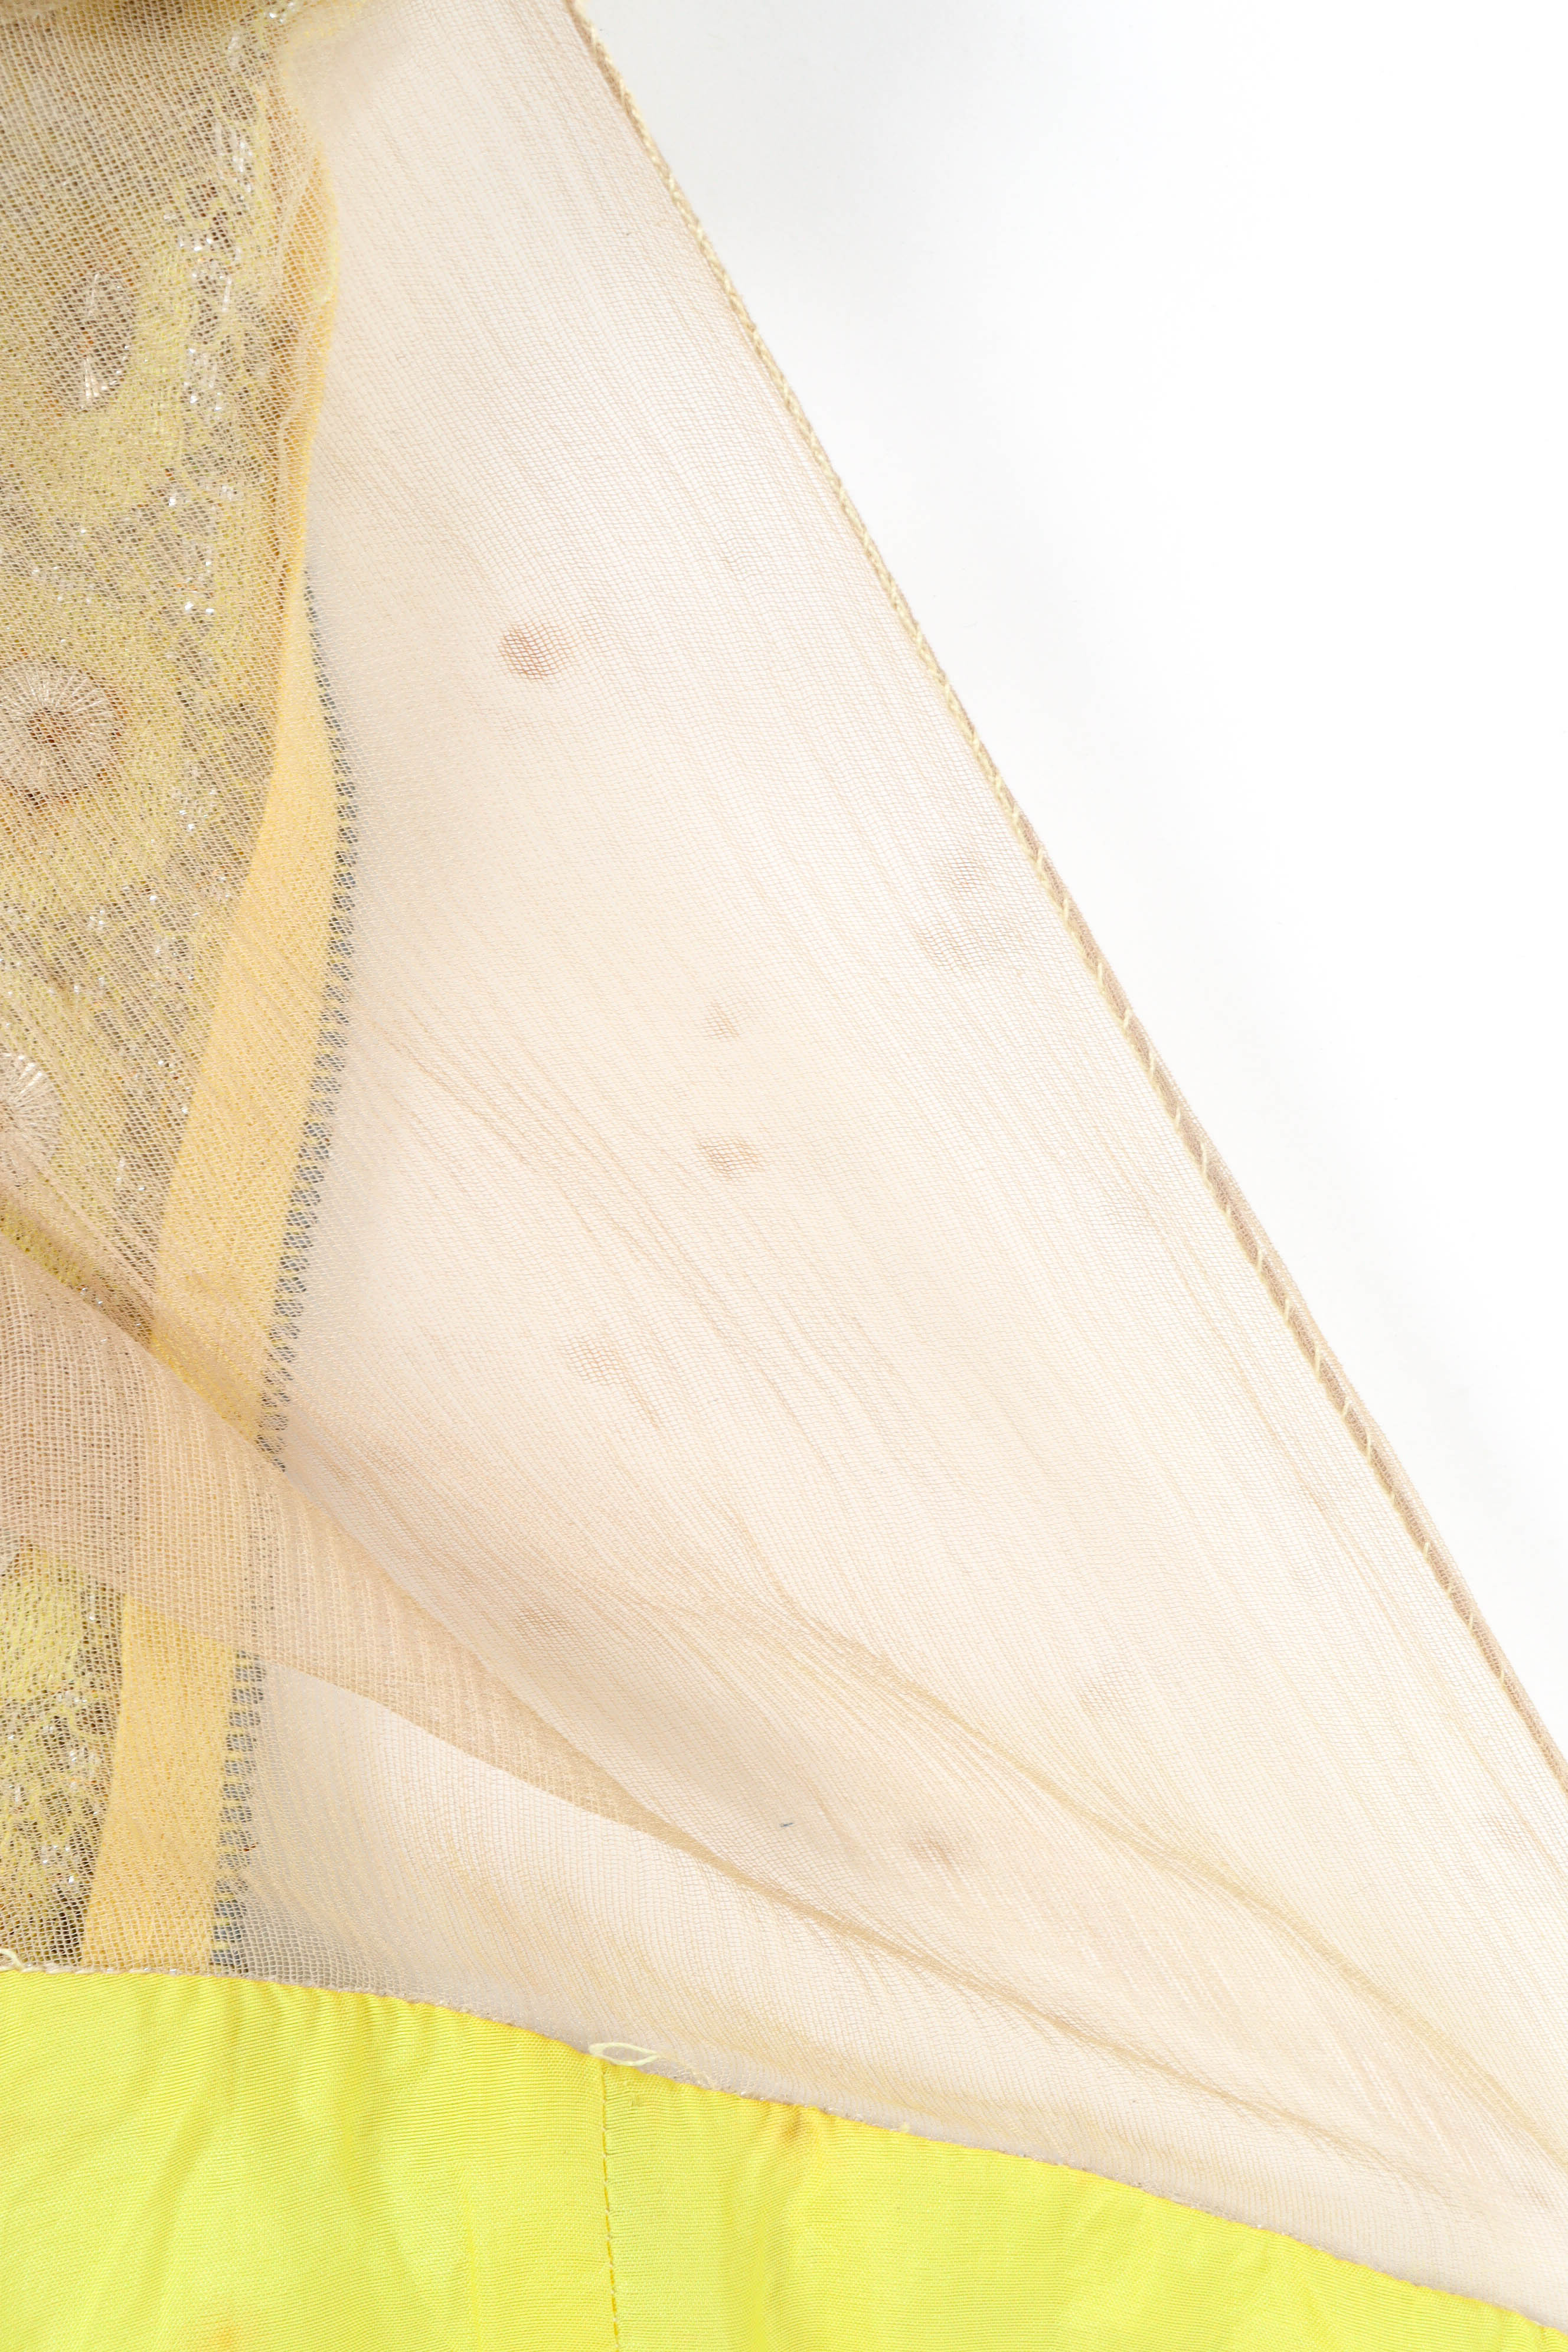 Vintage Bonwit Teller Rhinestone Dotted Dress mesh shoulder liner stain @ Recess LA